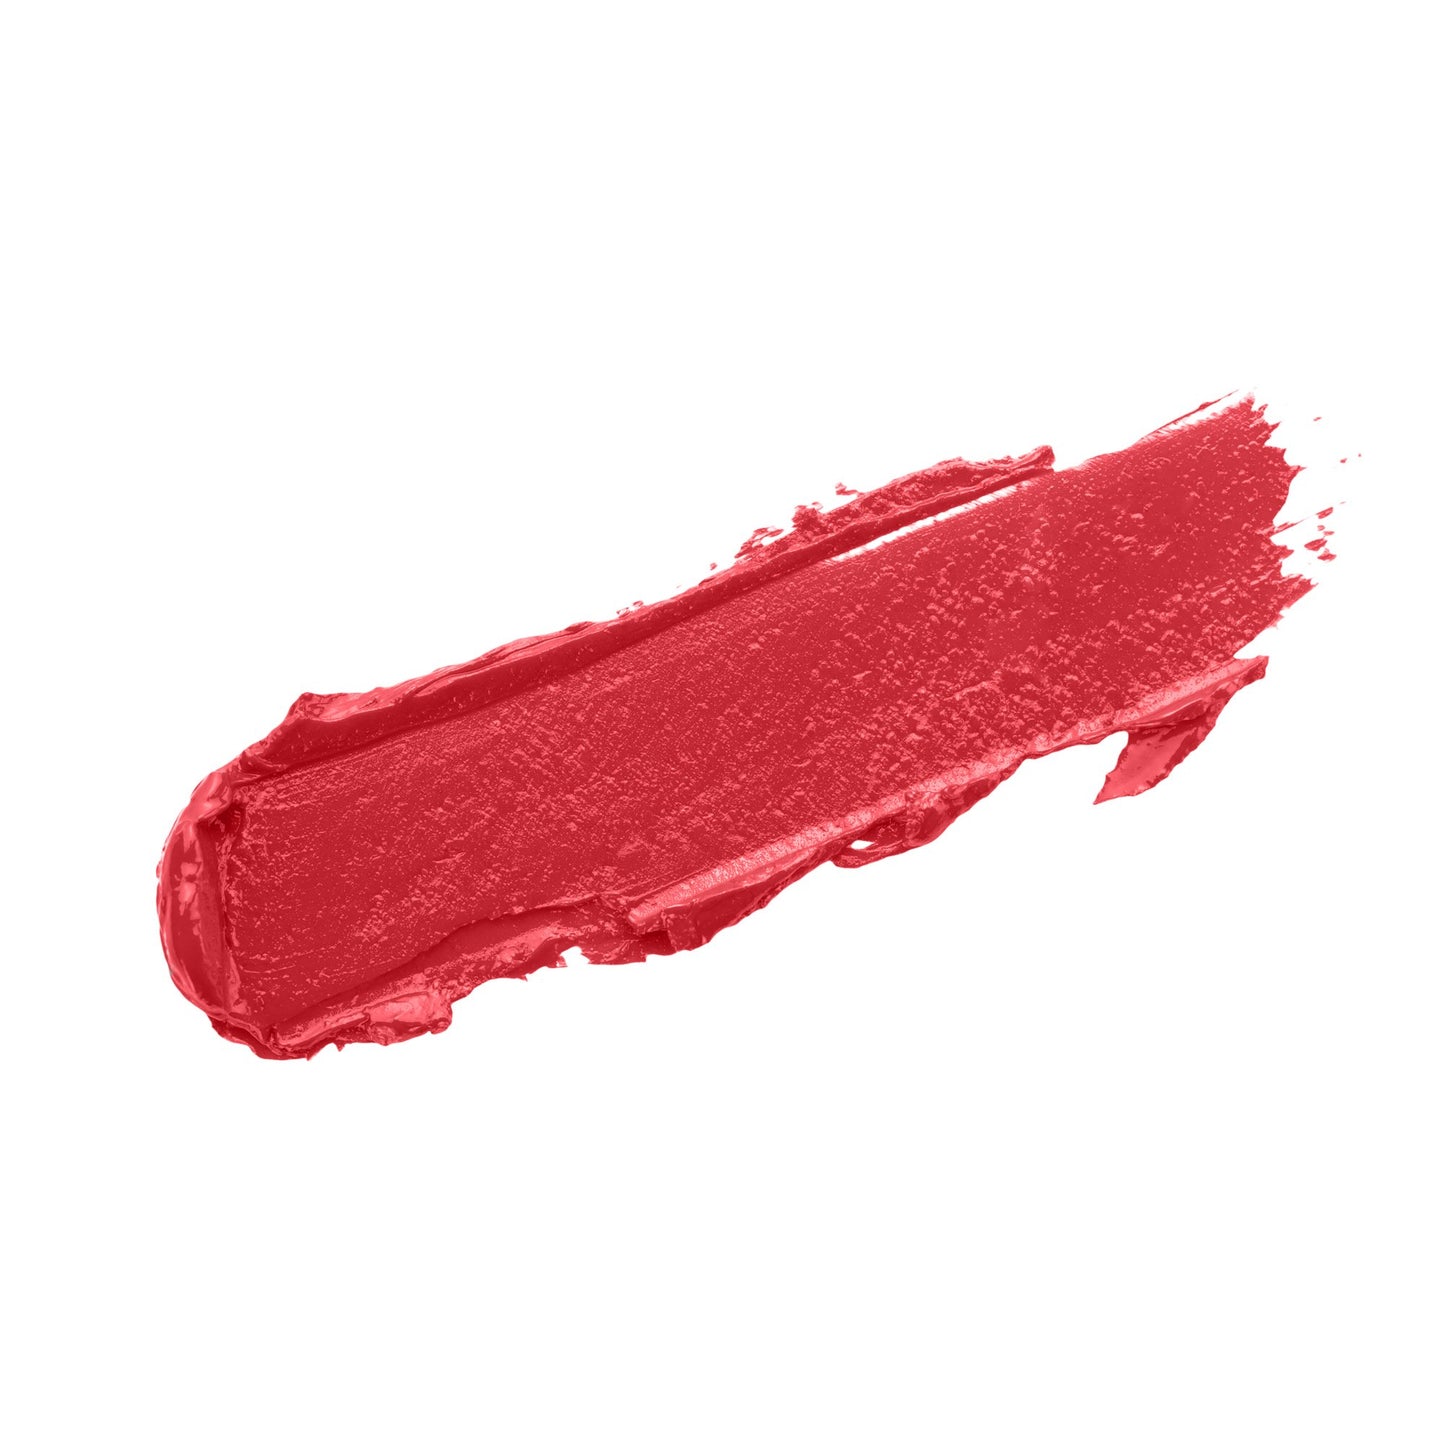 Read My Lipstick - Silky Satin - The Crème Shop